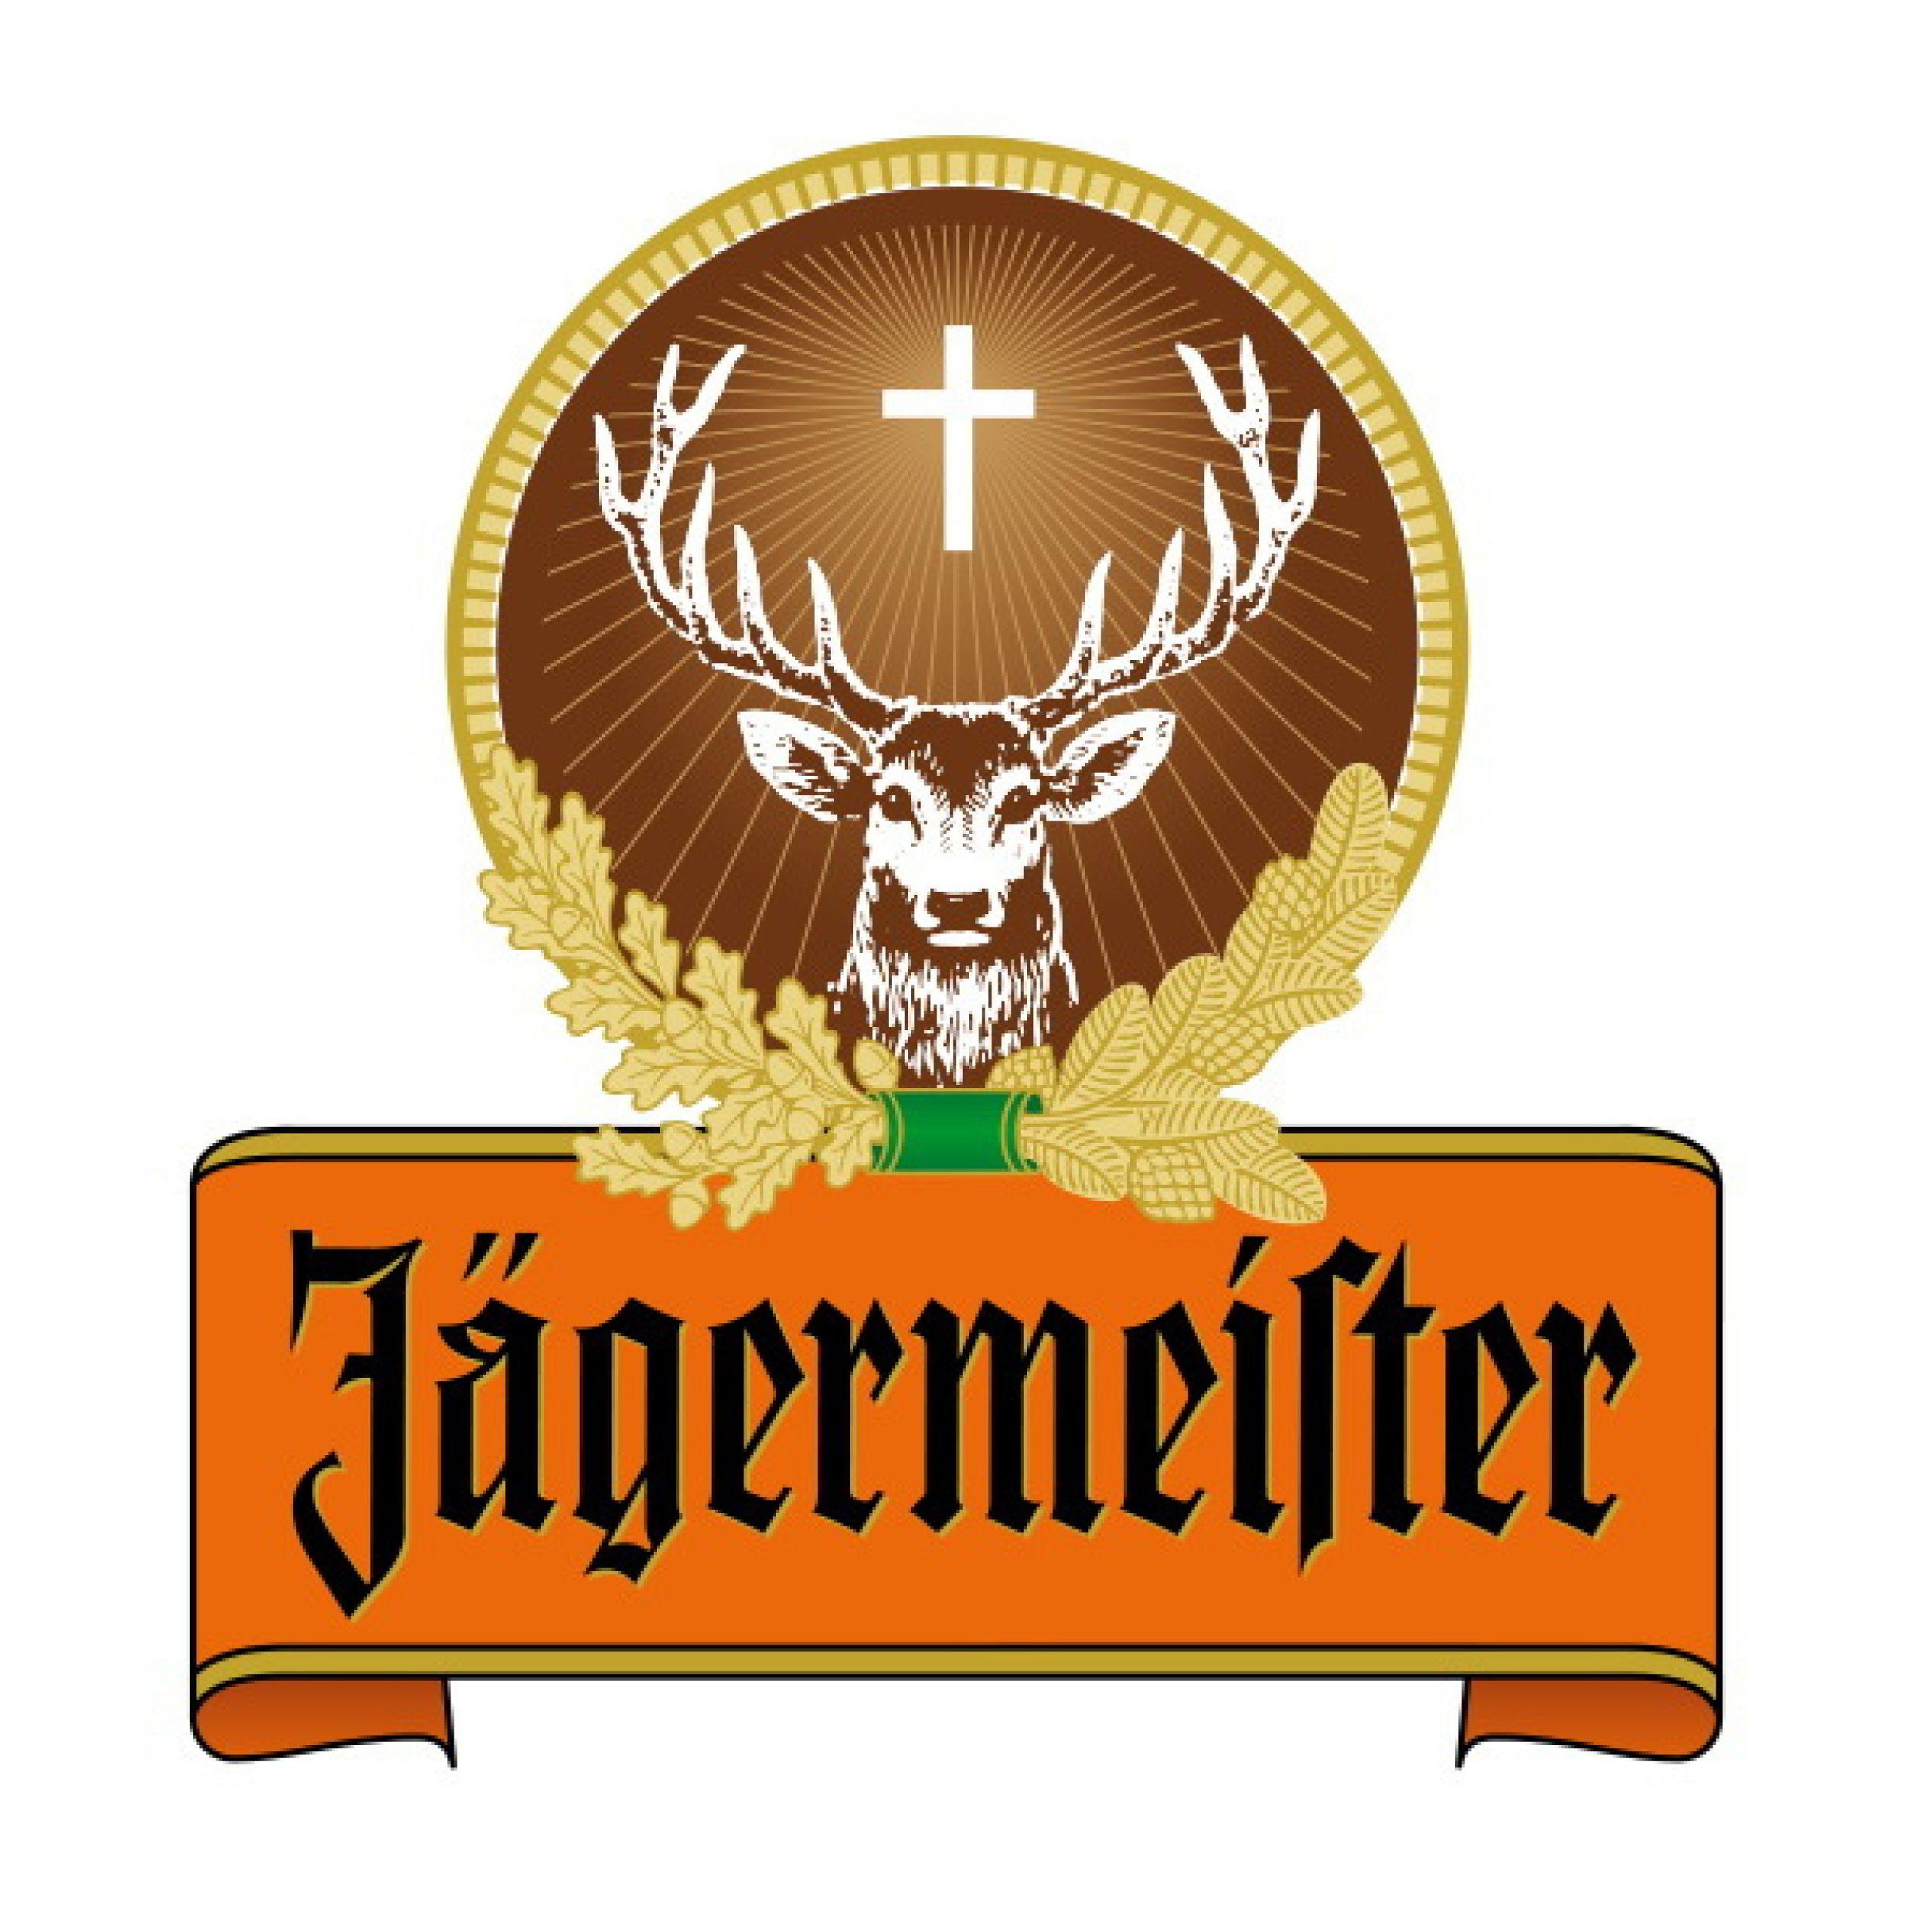 Top HD Jägermeister Wallpaper. Food HD.86 KB